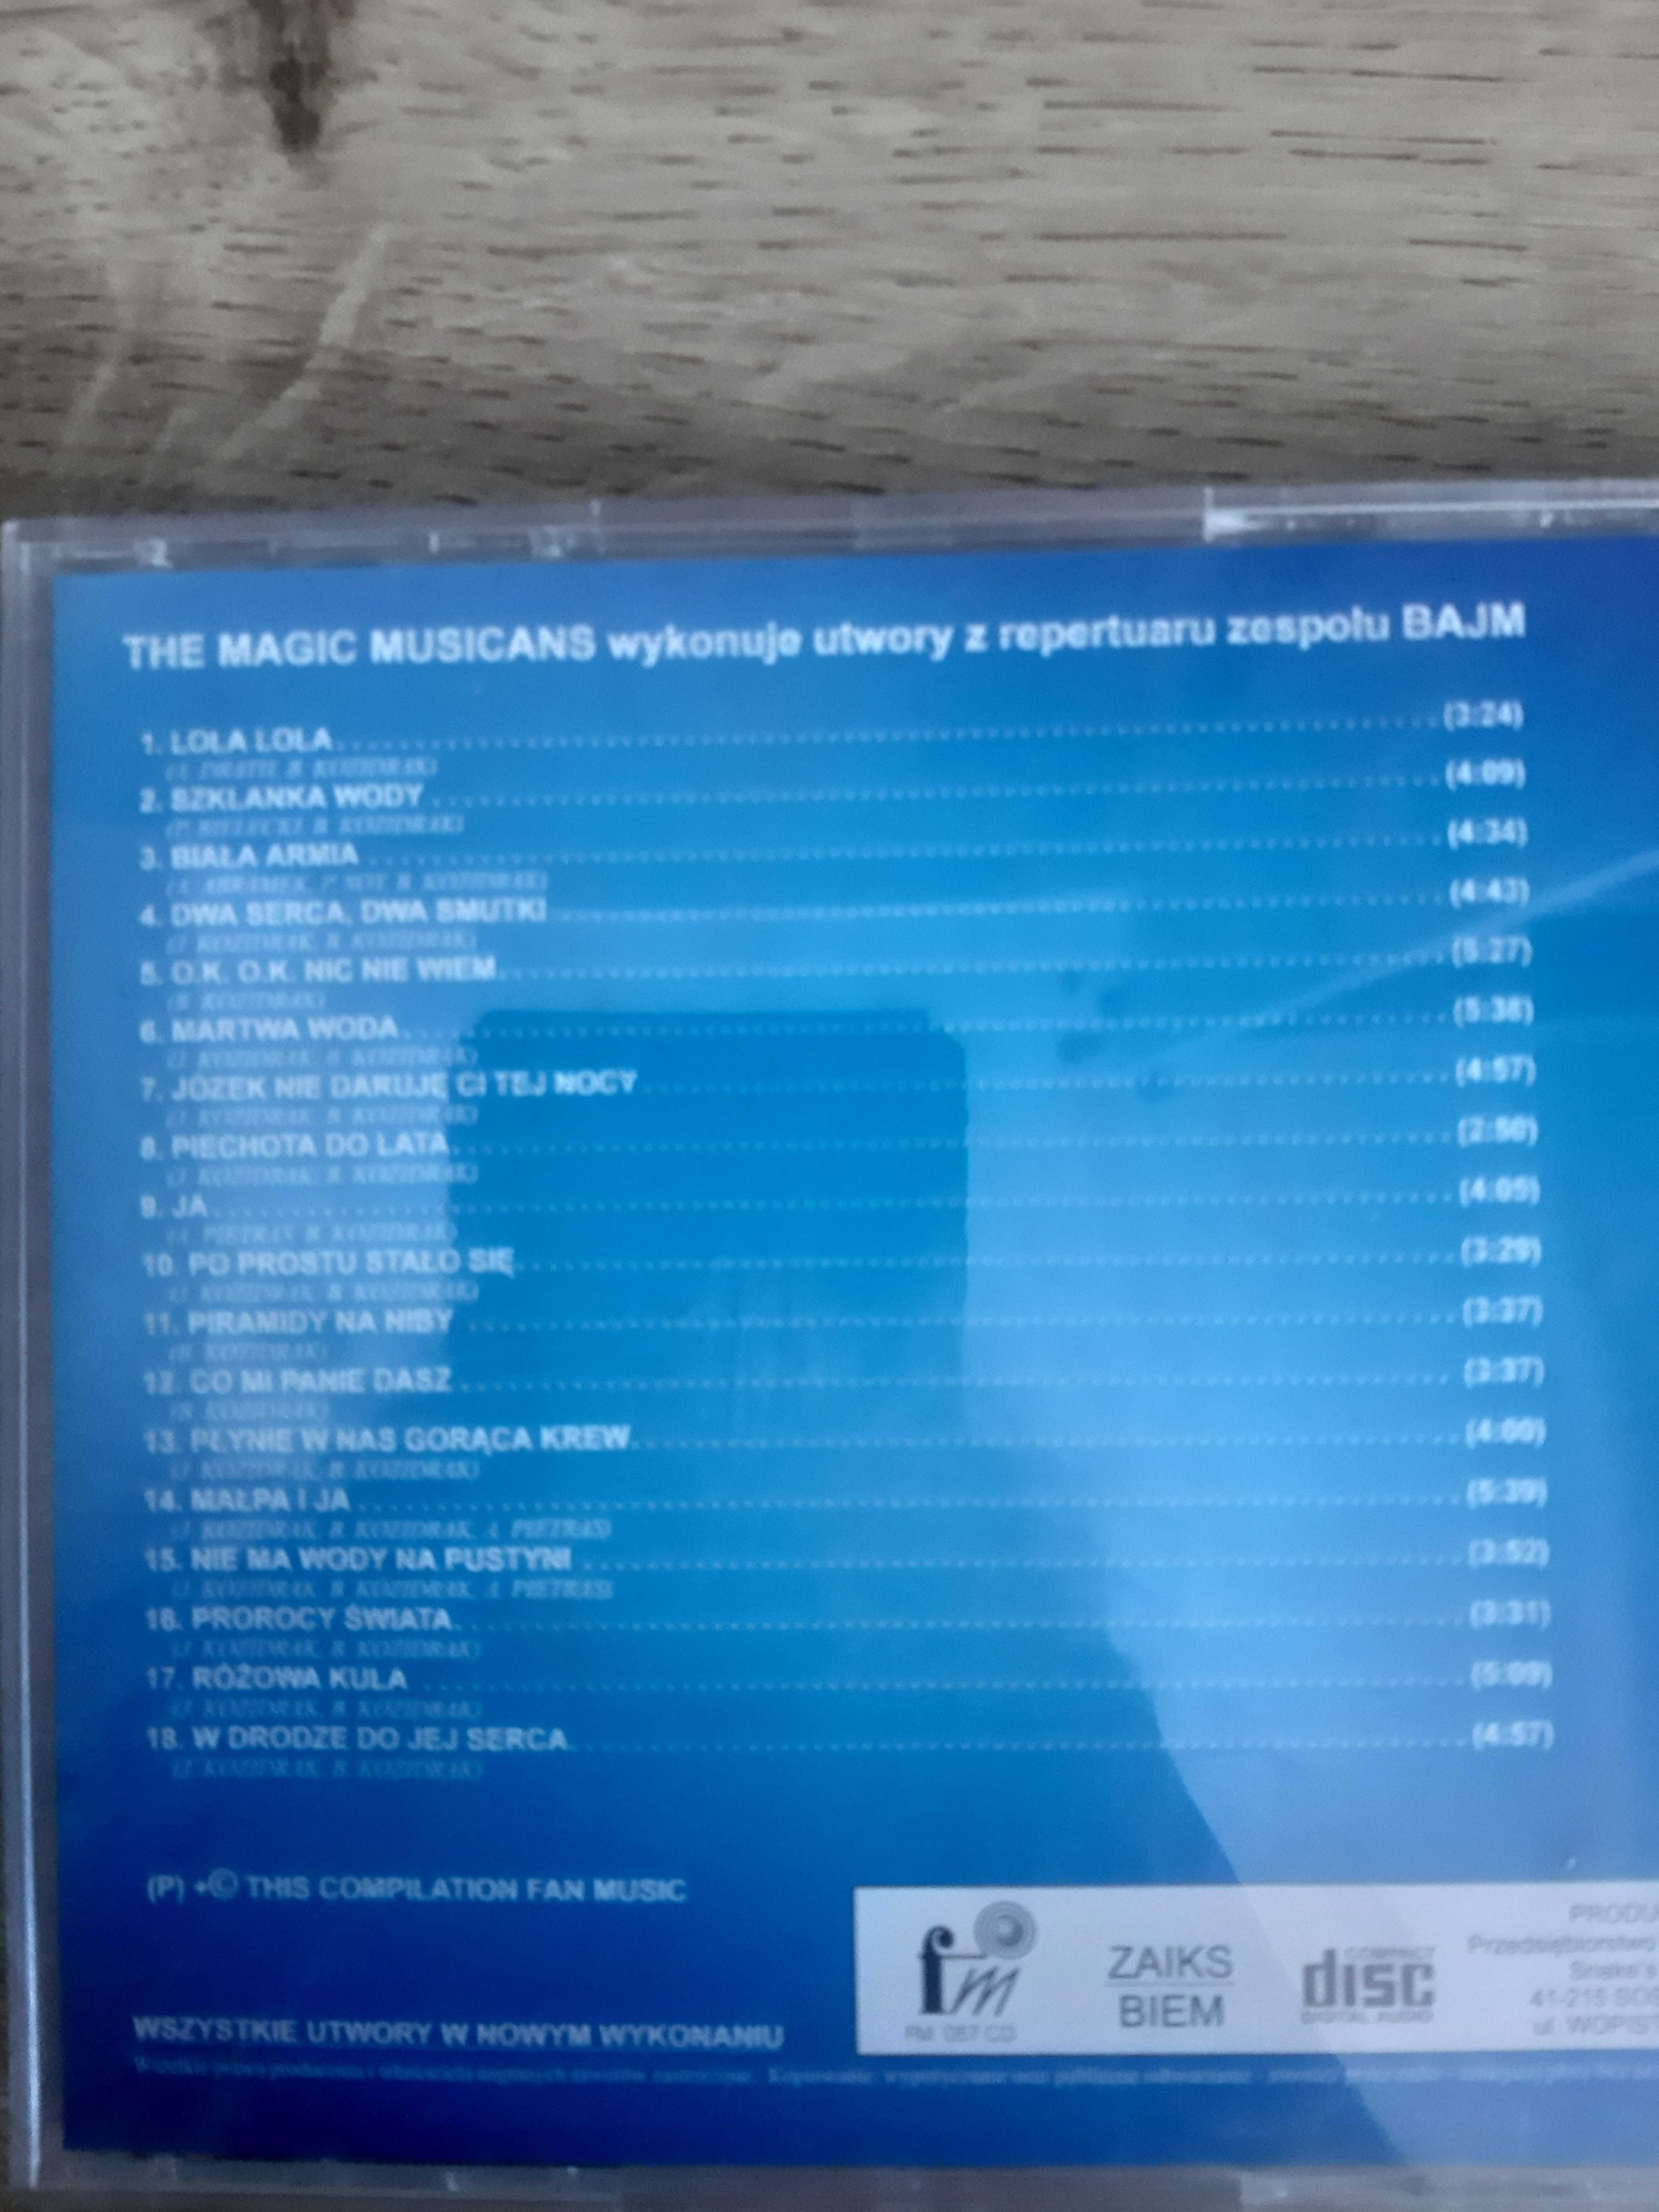 płyta CD Bajm hity (tha magic musicians)